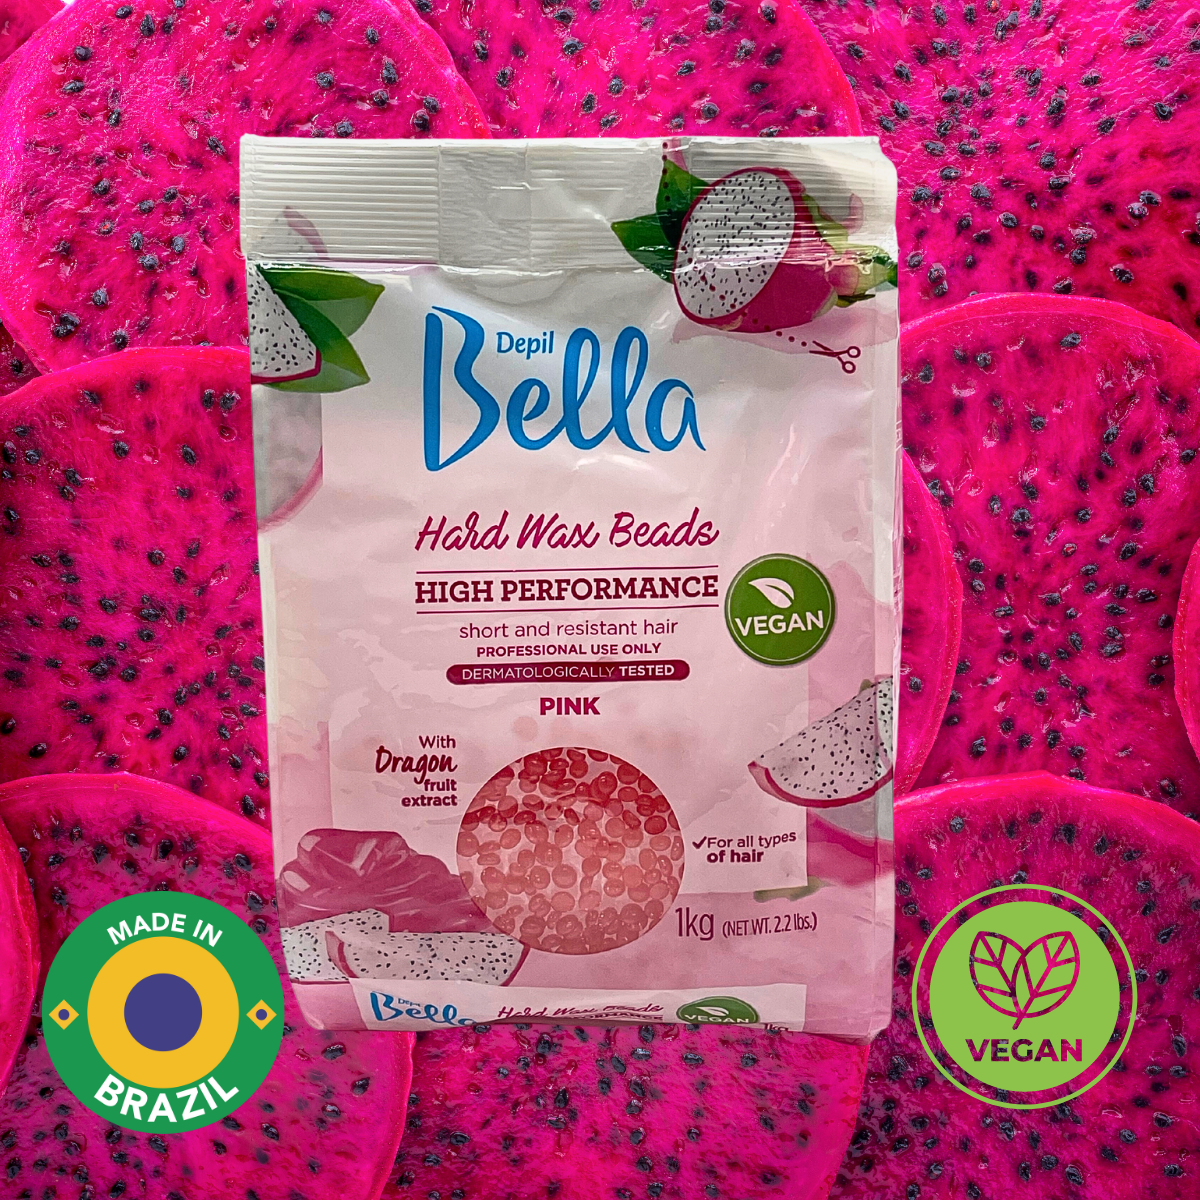 Depil Bella Pink Pitaya Confetti Hard Wax Beads - High-Performance Hair Removal, Vegan 2.2 lbs (20 Units Offer)